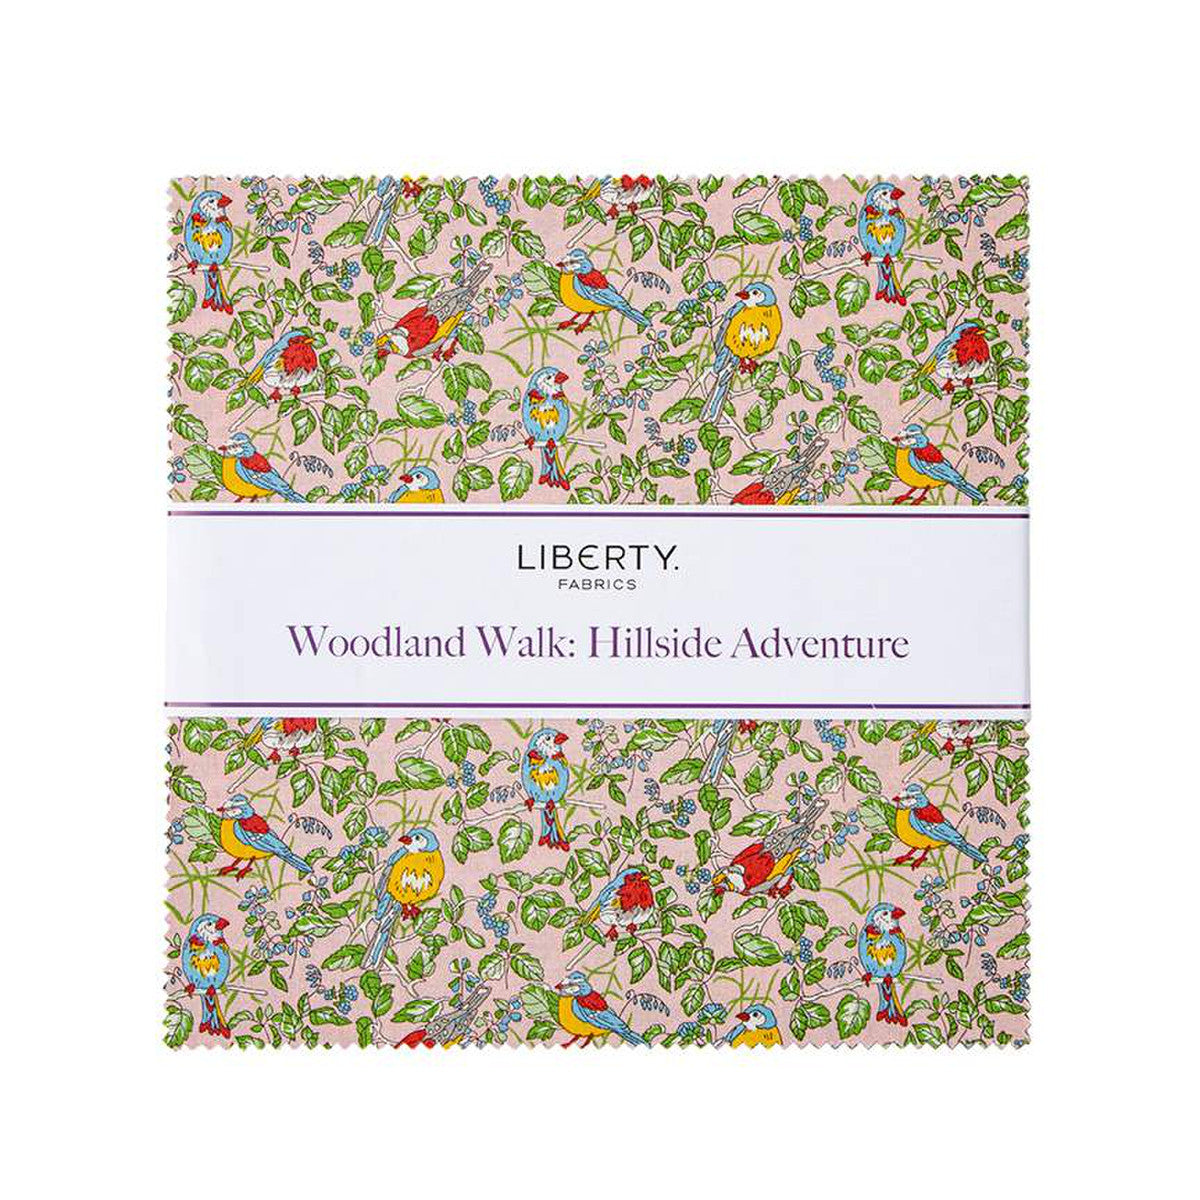 Woodland Walk / Hillside Adventure by Liberty Fabrics